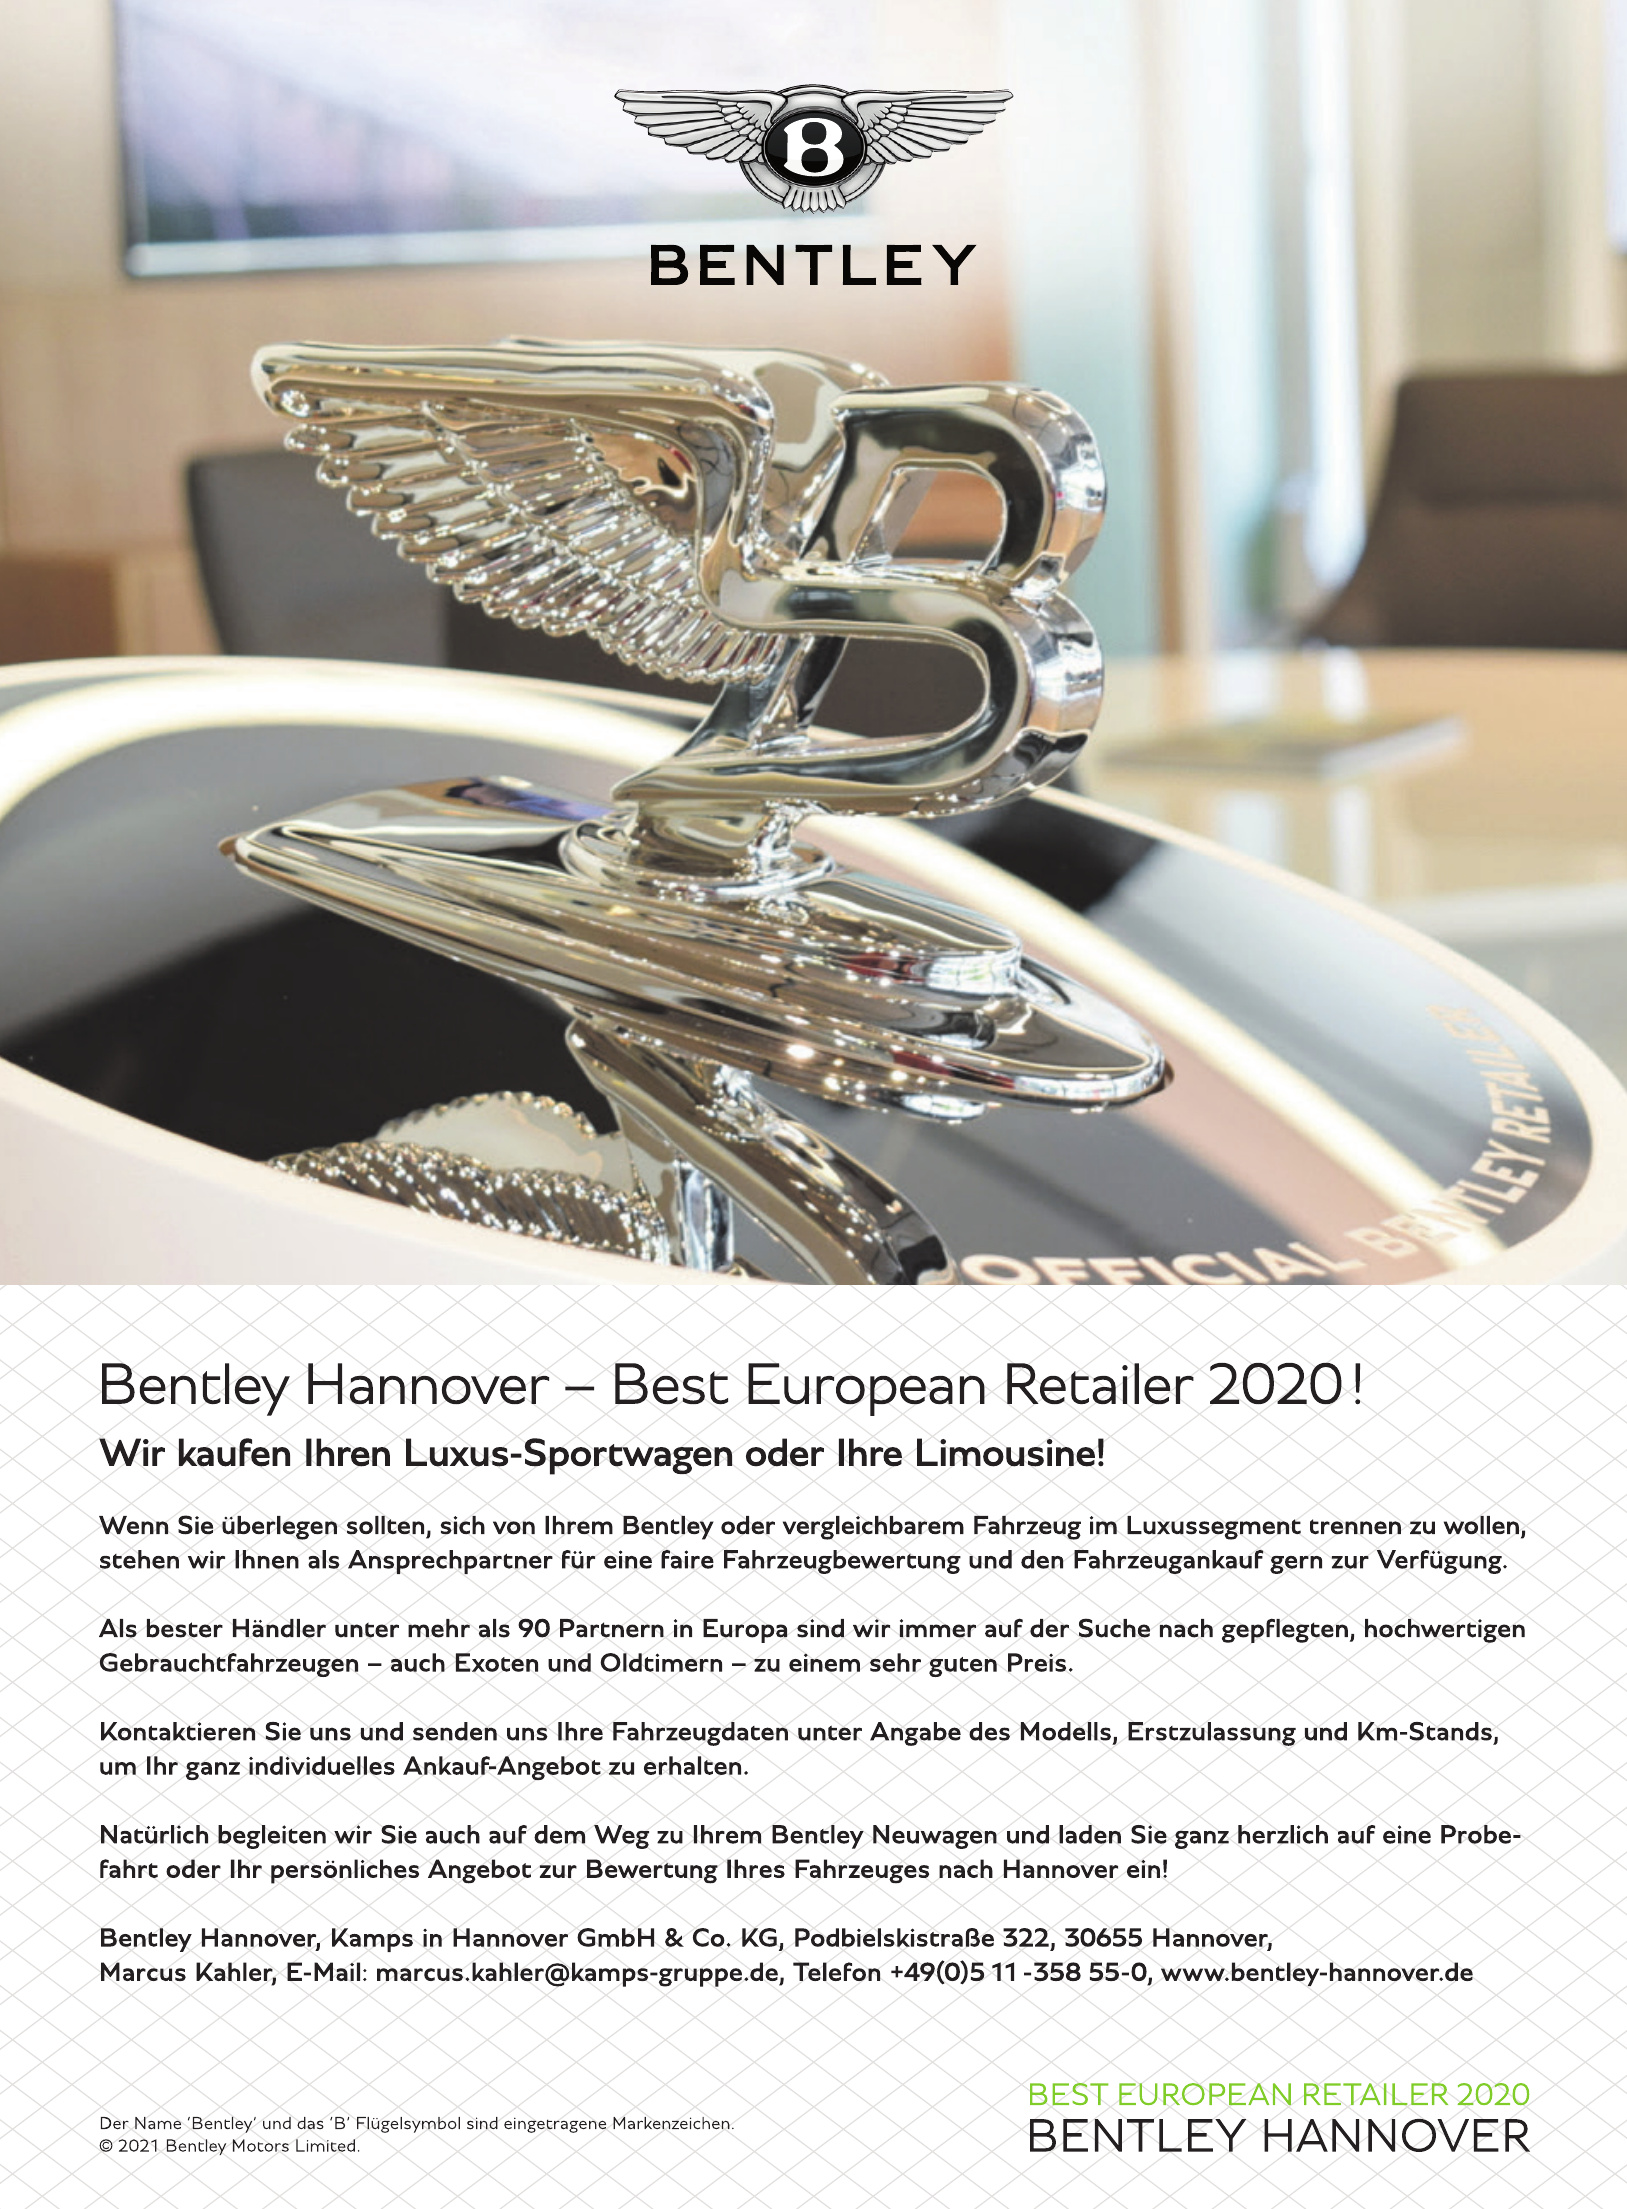 Bentley Hannover - Kamps in Hannover GmbH & Co. KG